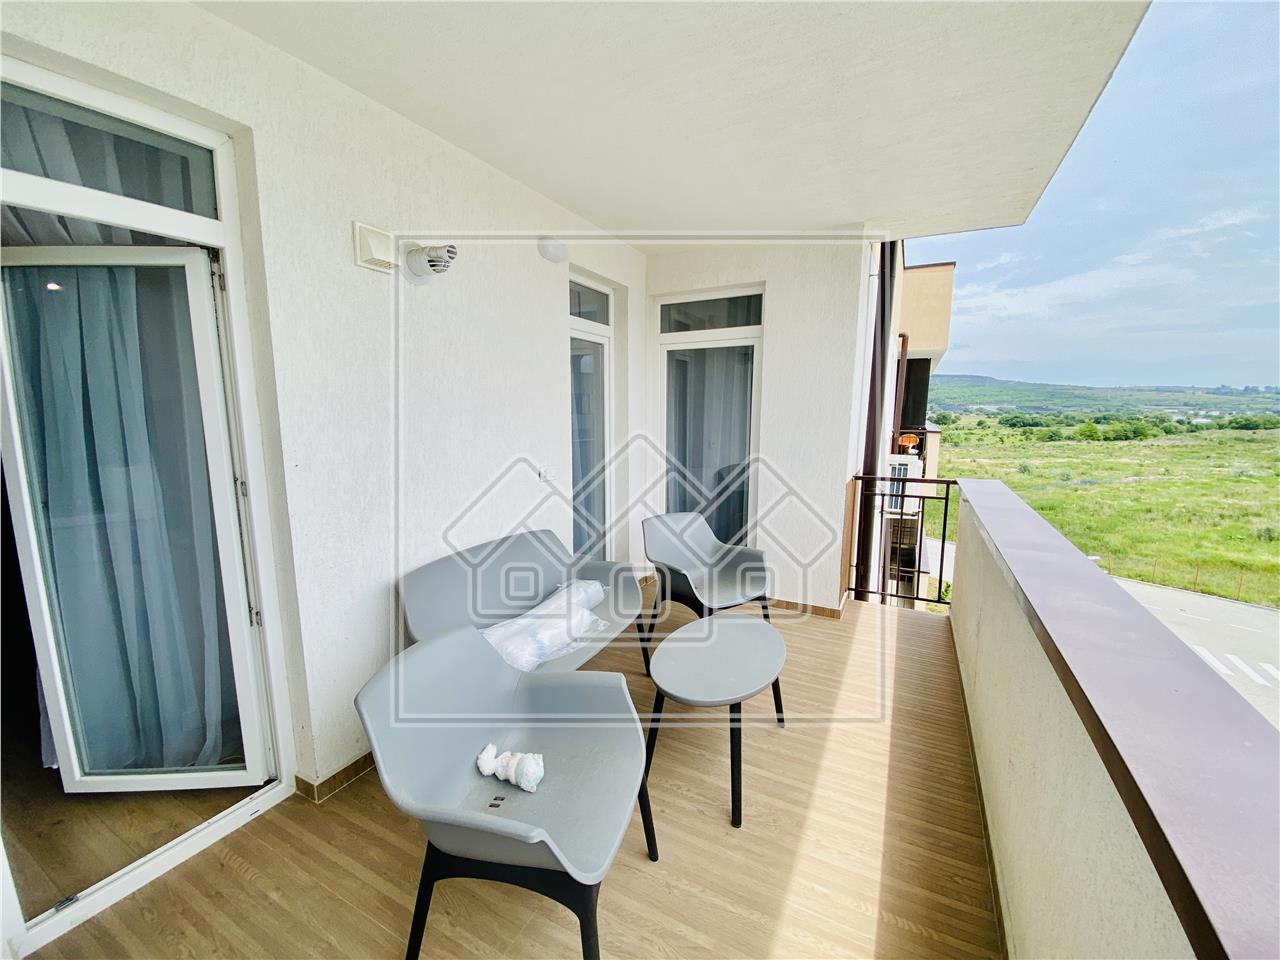 Apartament de vanzare in Sibiu -2 camere, dressing, 2 bai si balcon